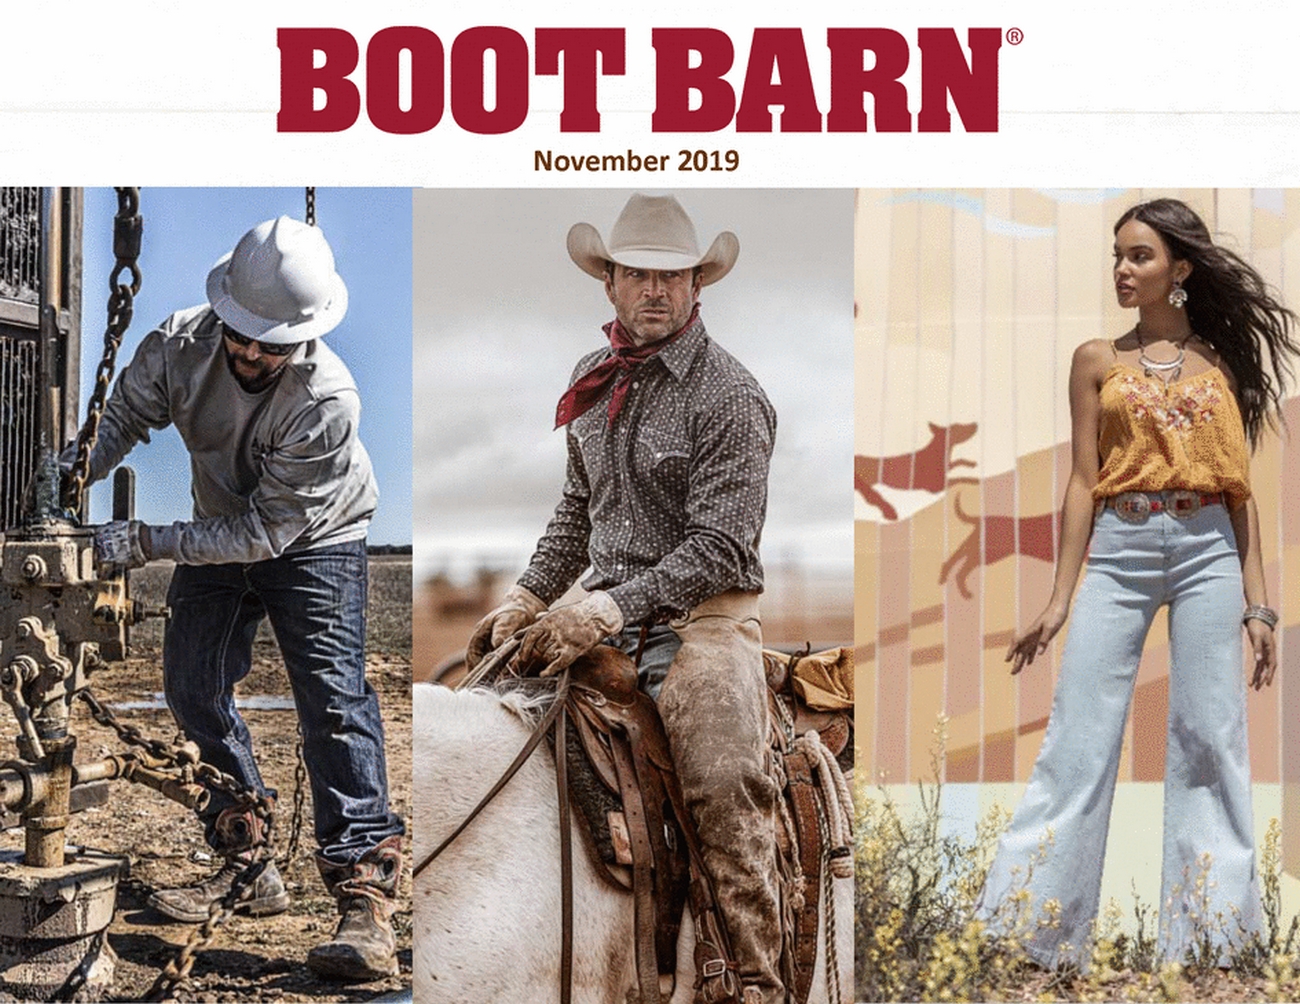 21745-1-mm_boot barn investor presentation - november 2019 ndr v4_page_01.jpg